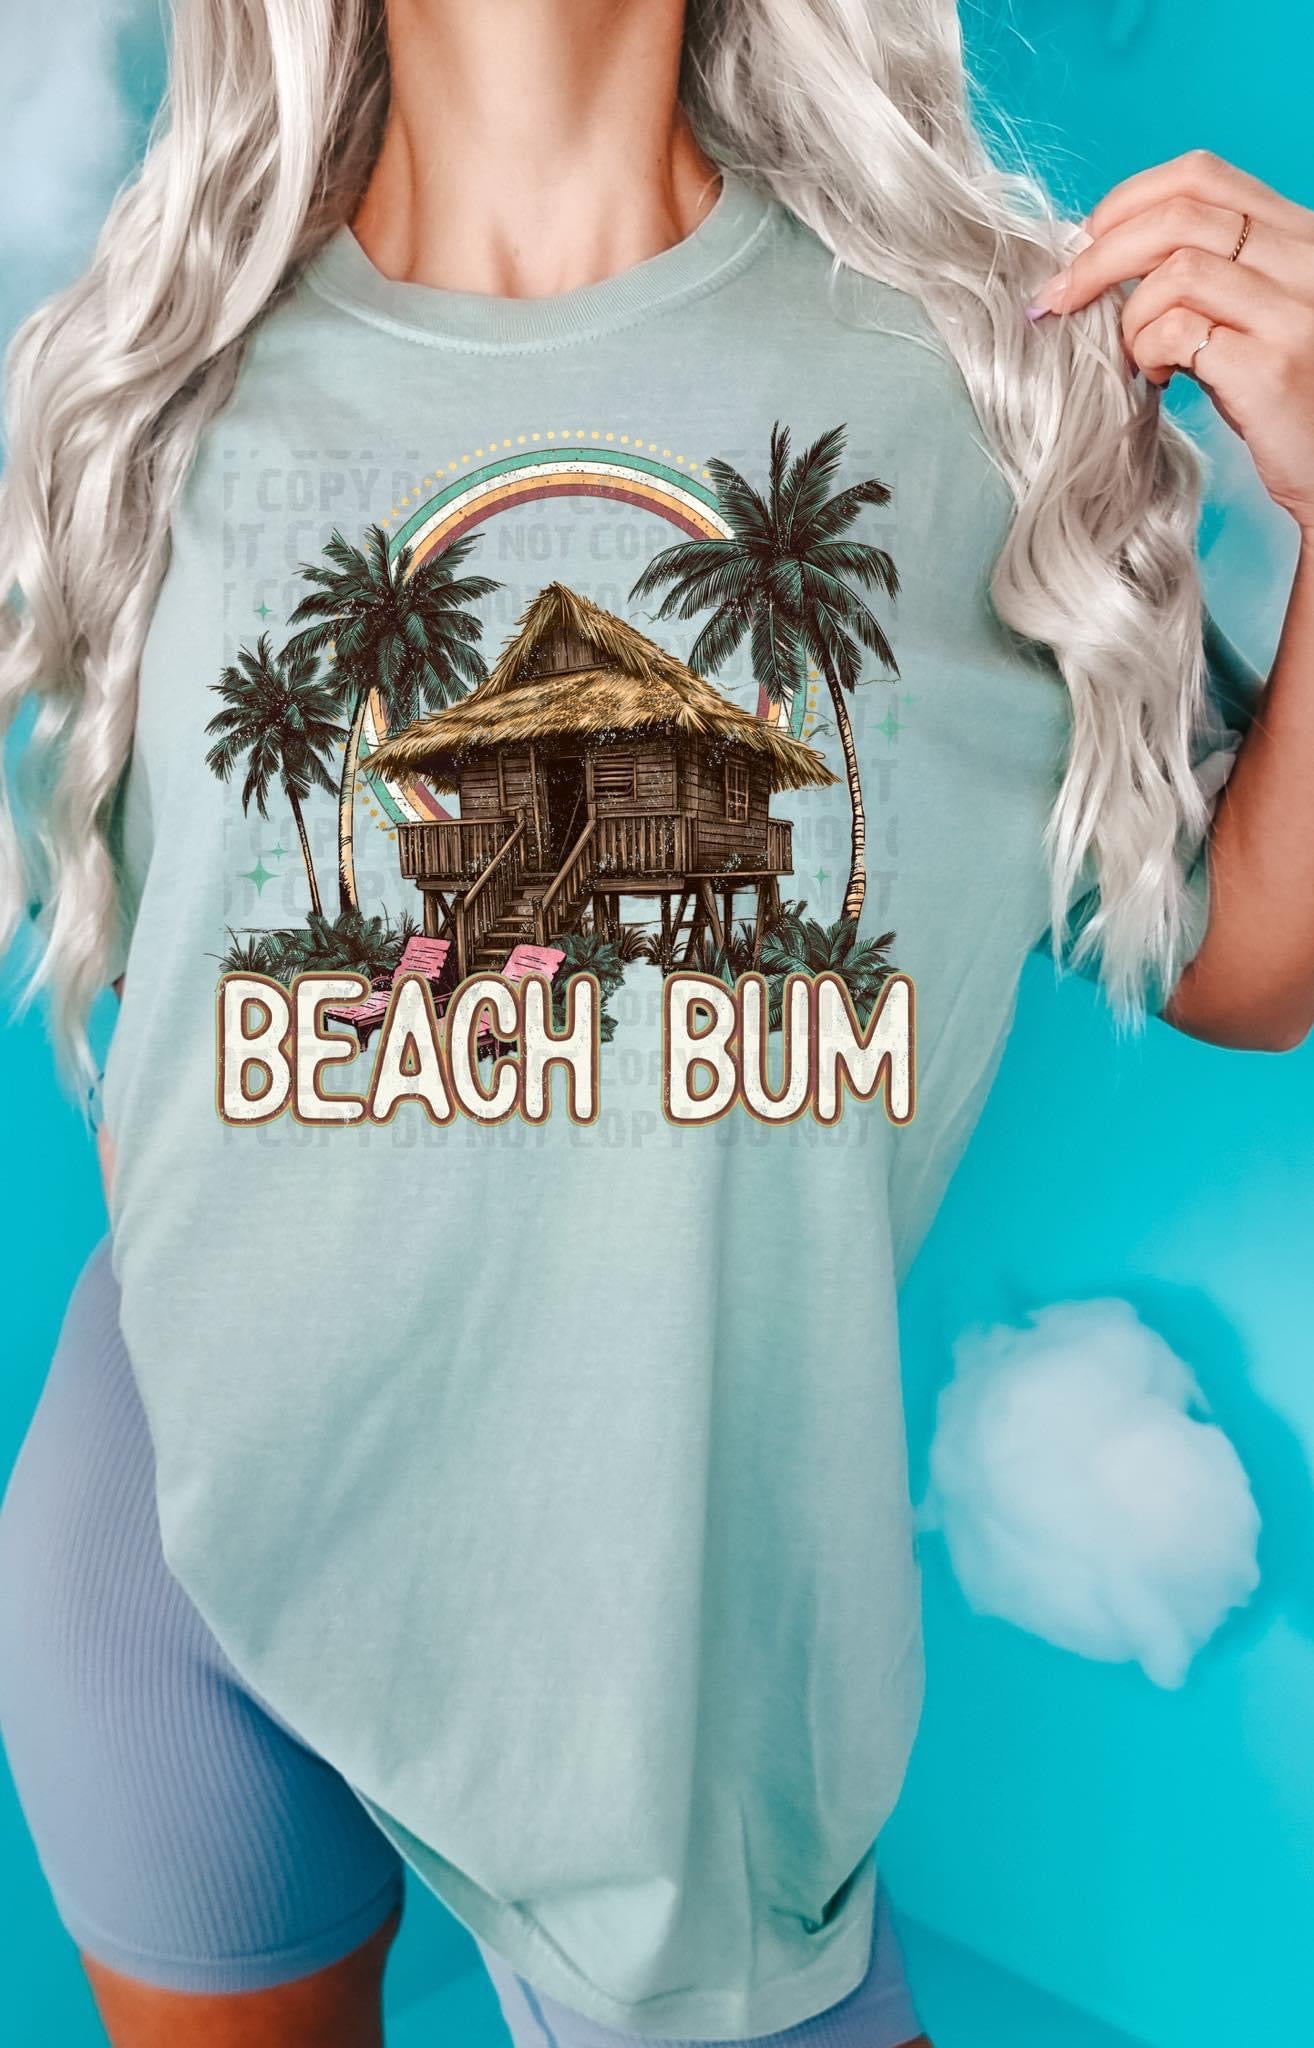 Beach bum screen print transfer